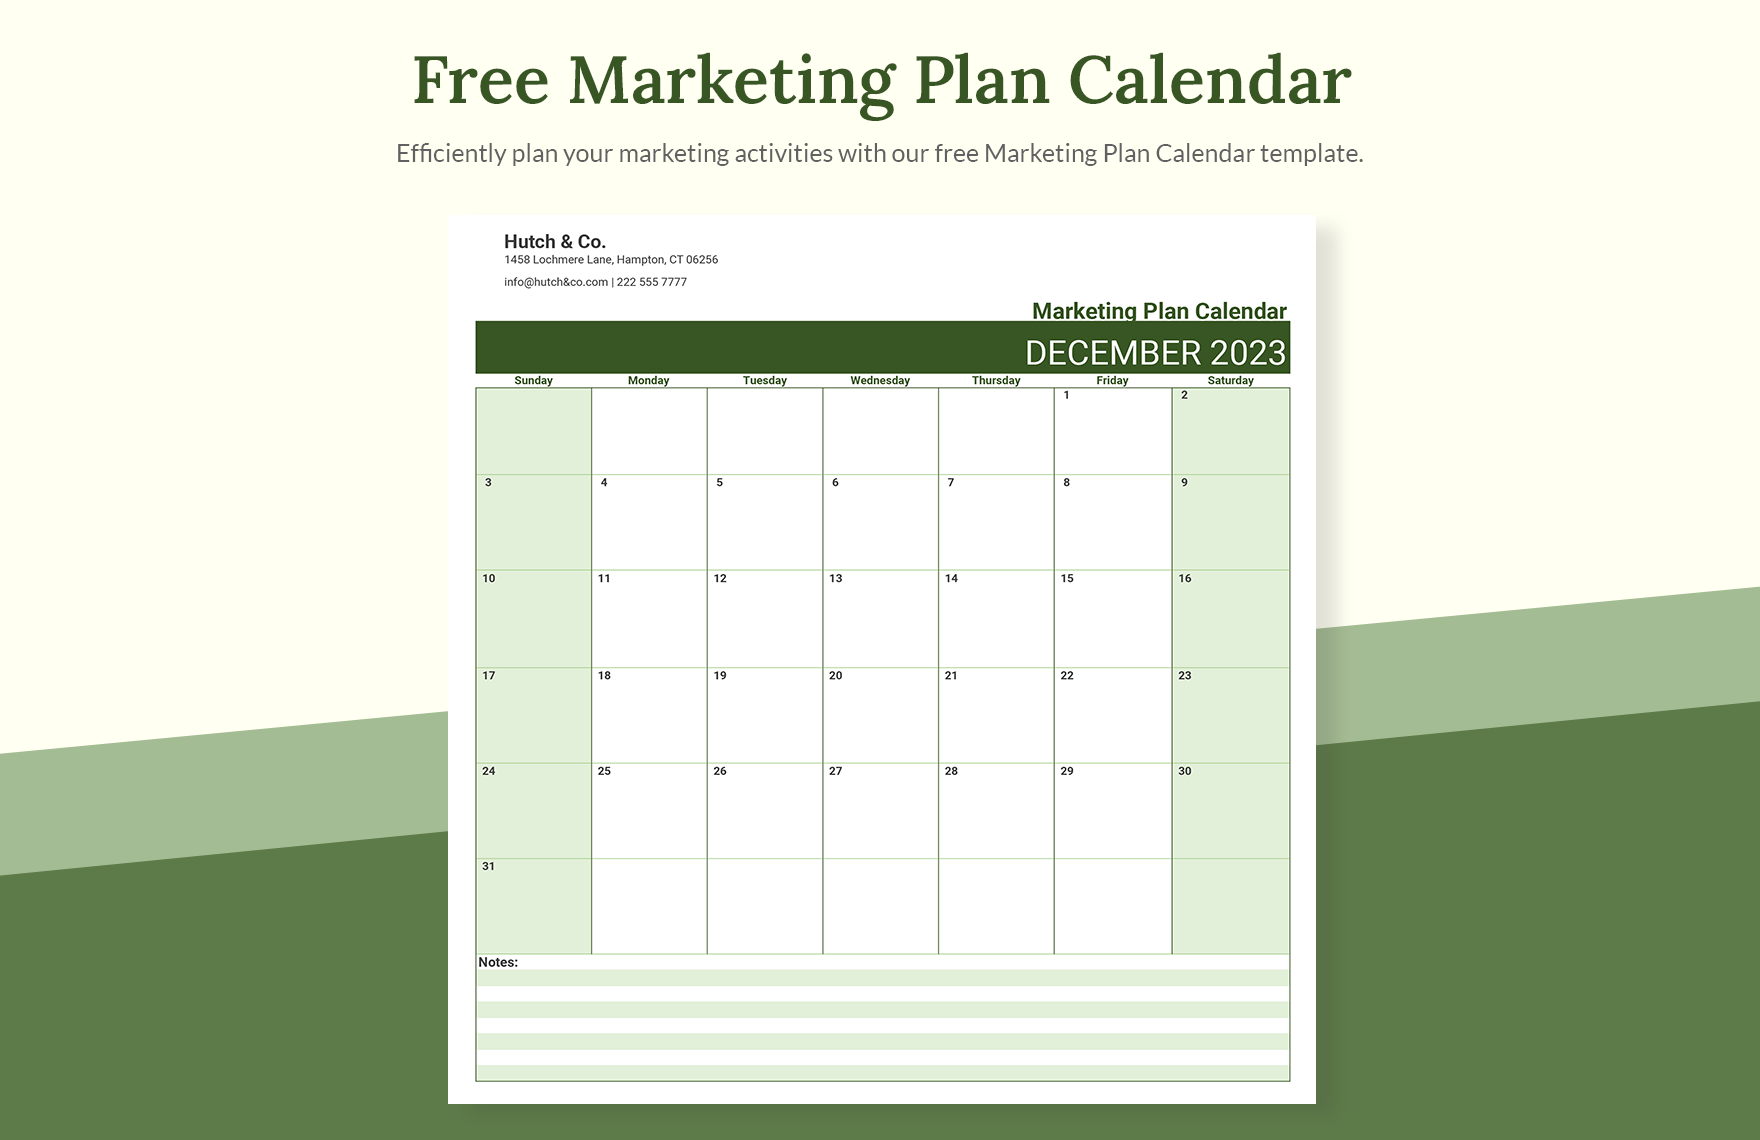 Free Marketing Plan Calendar